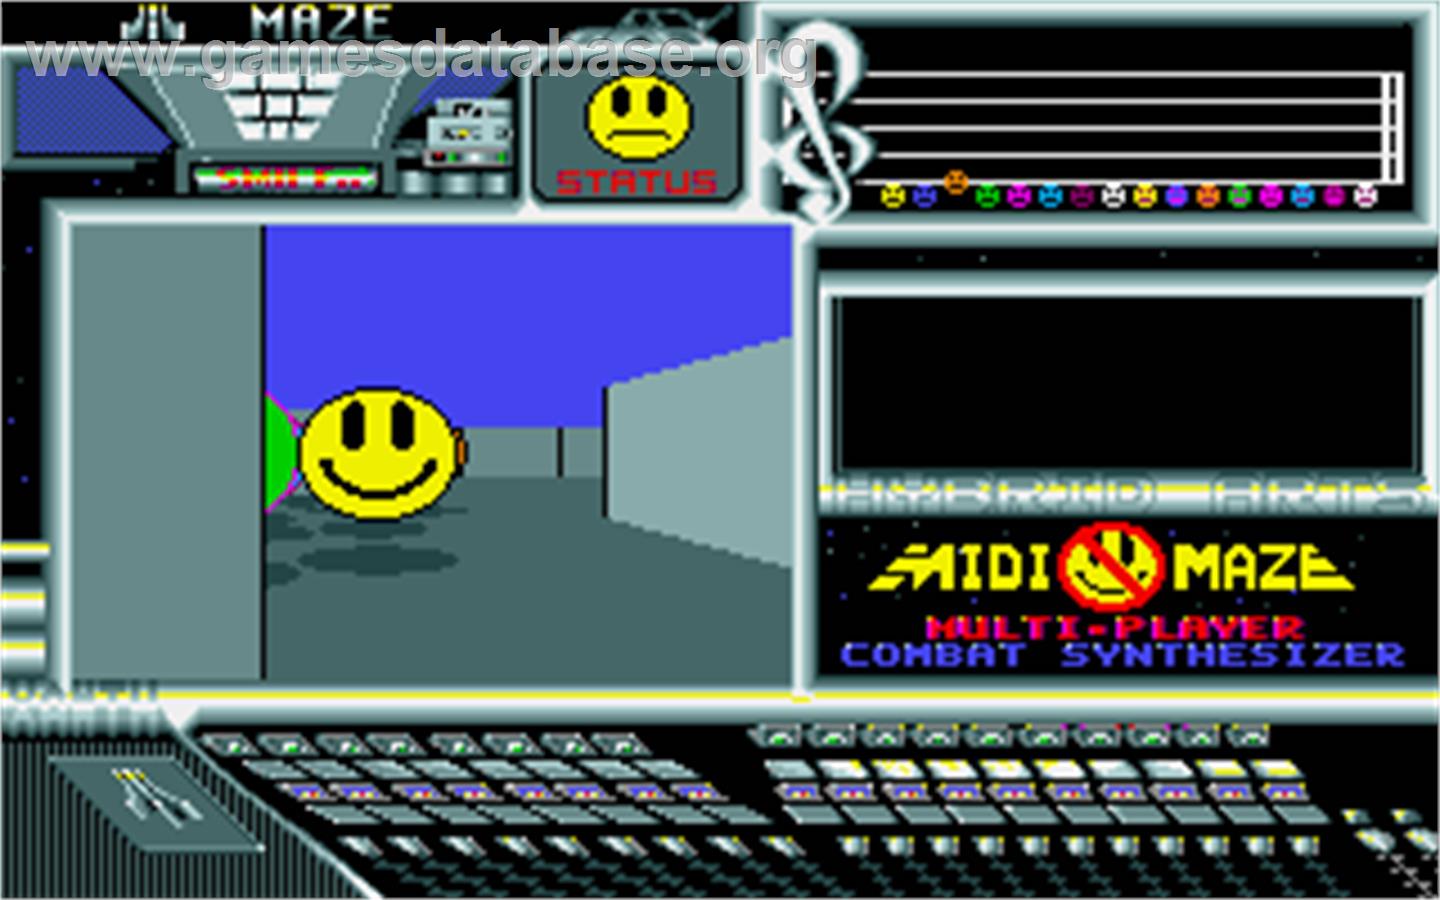 Midi-Maze - Atari ST - Artwork - In Game